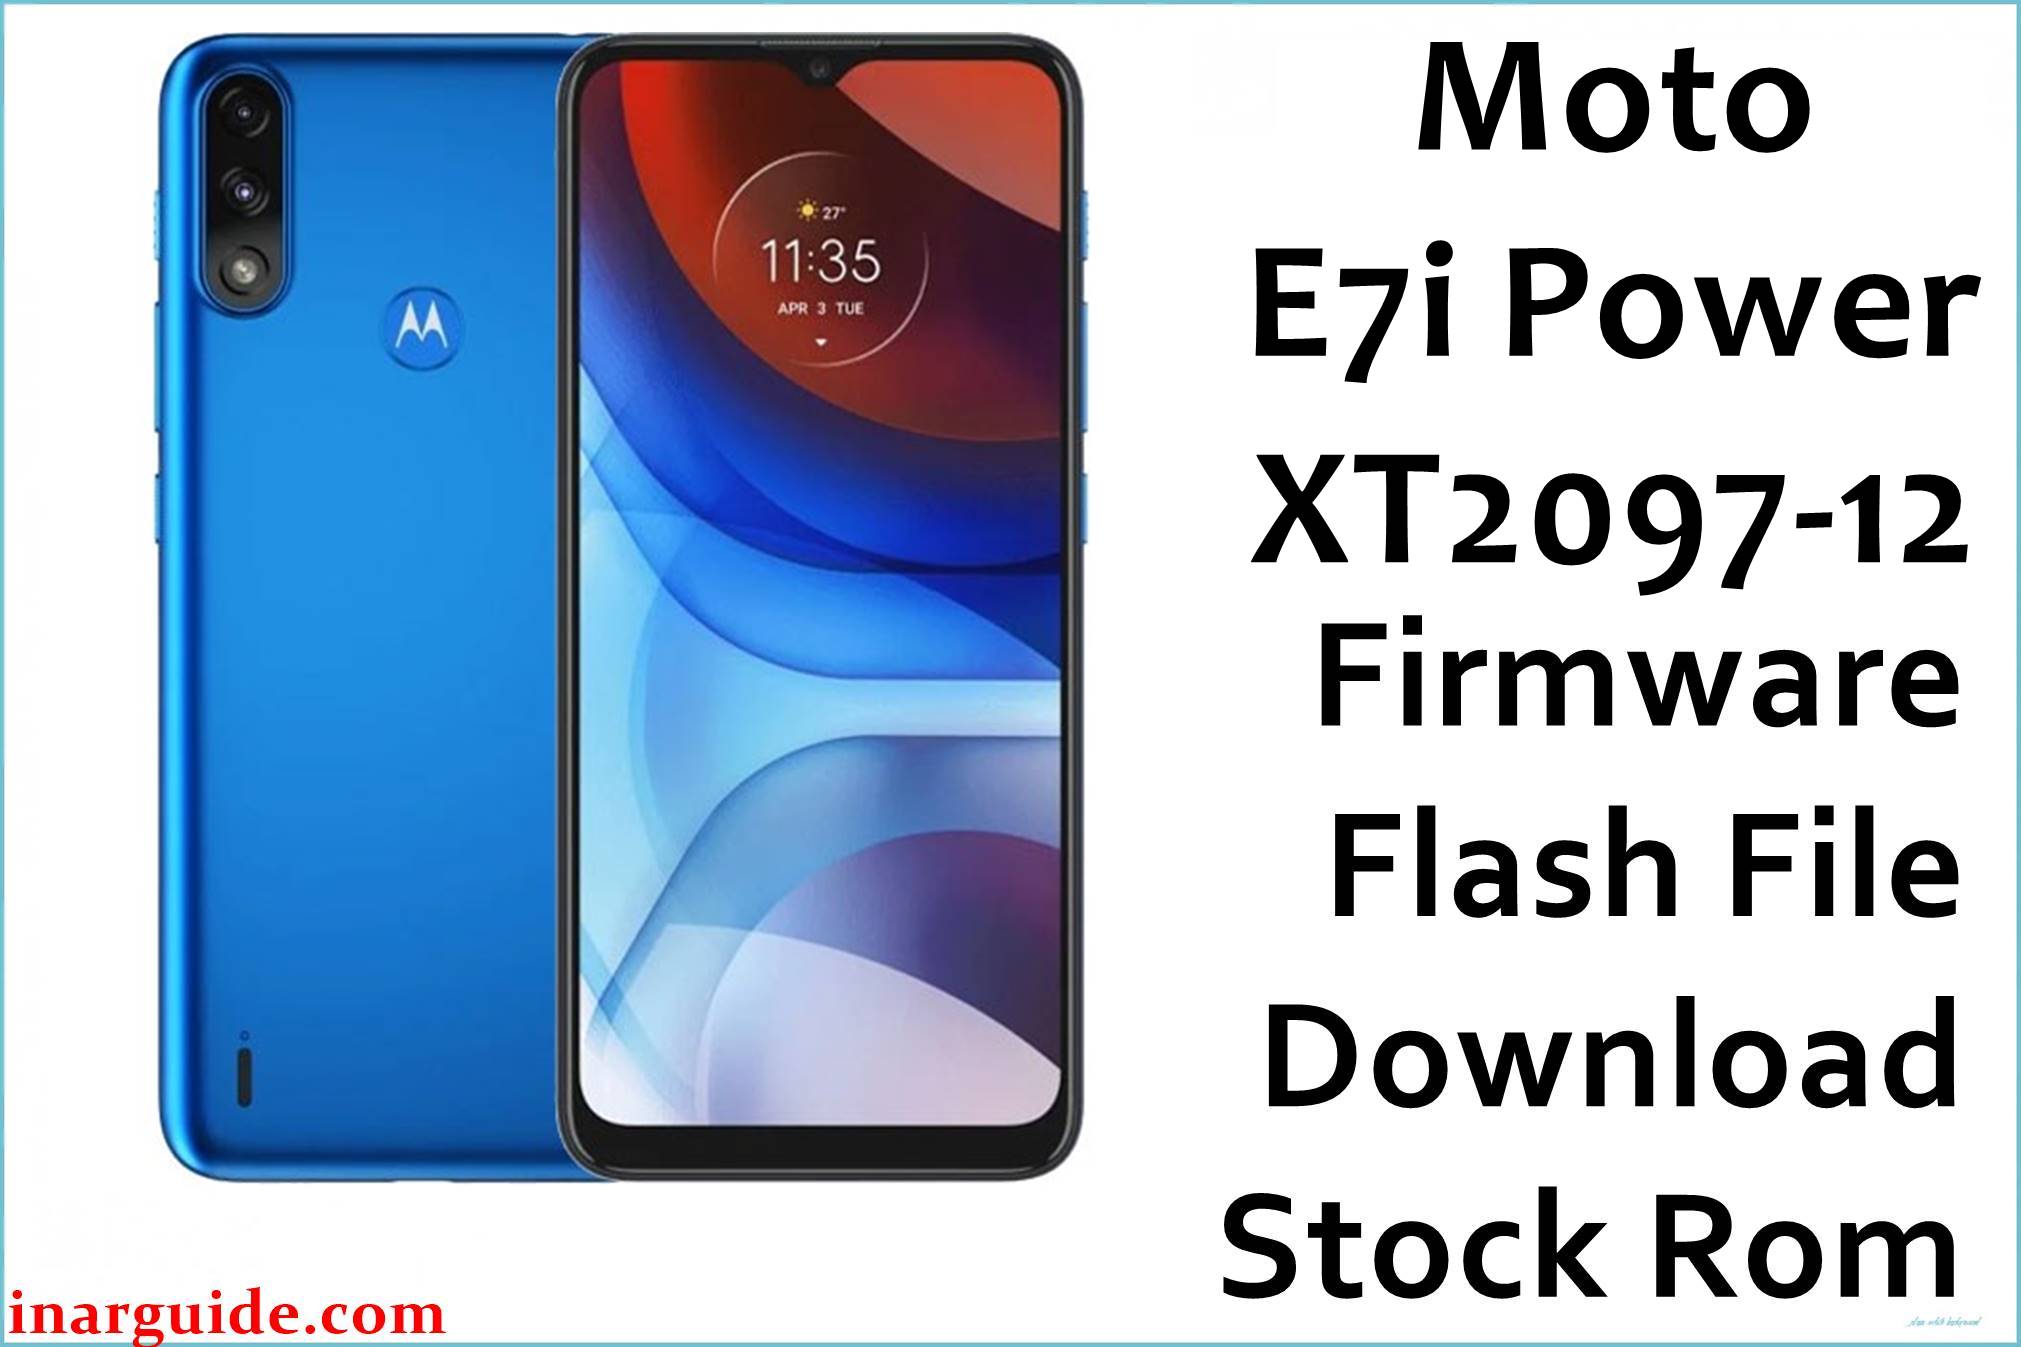 Motorola Moto E7i Power XT2097-12